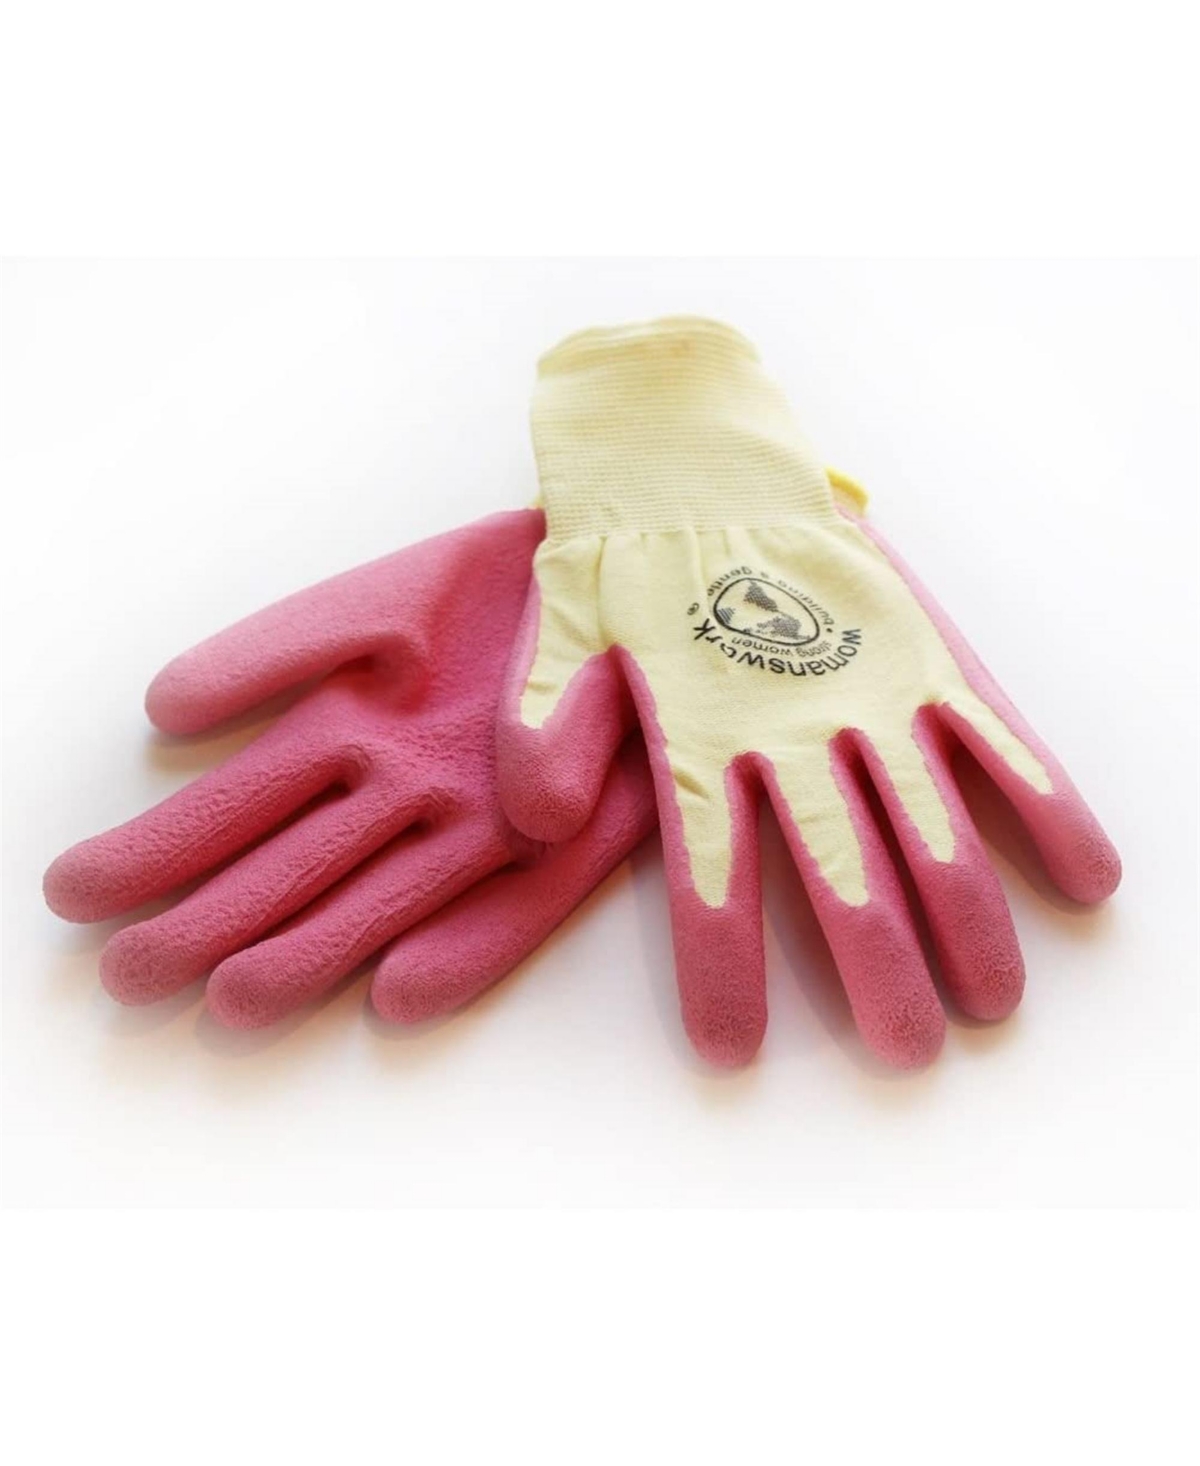 Gardening Protective Weeding Glove For Women, Pink, Large - Multi